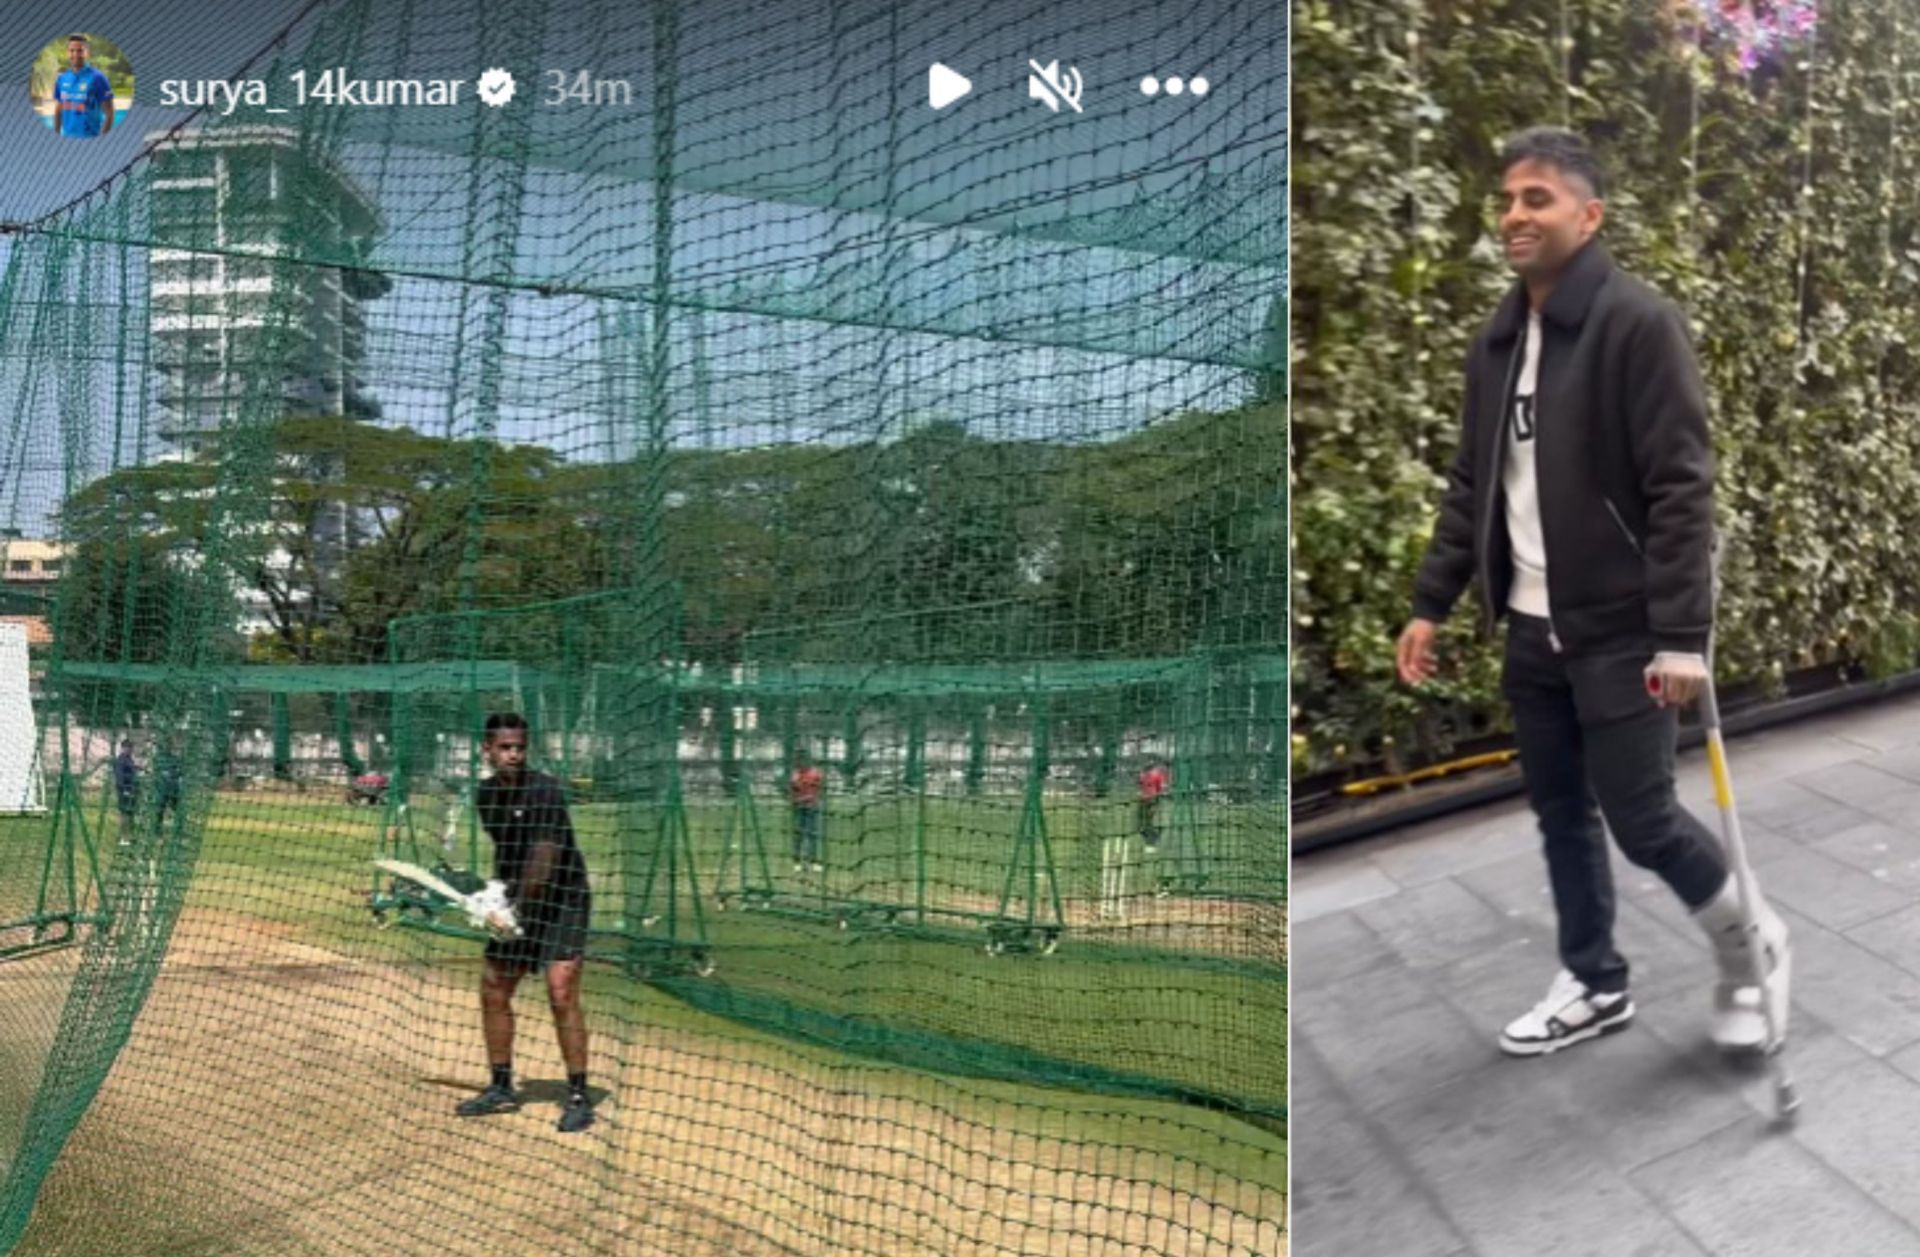 T20 superstar Suryakumar Yadav commences training in nets during rehab. 